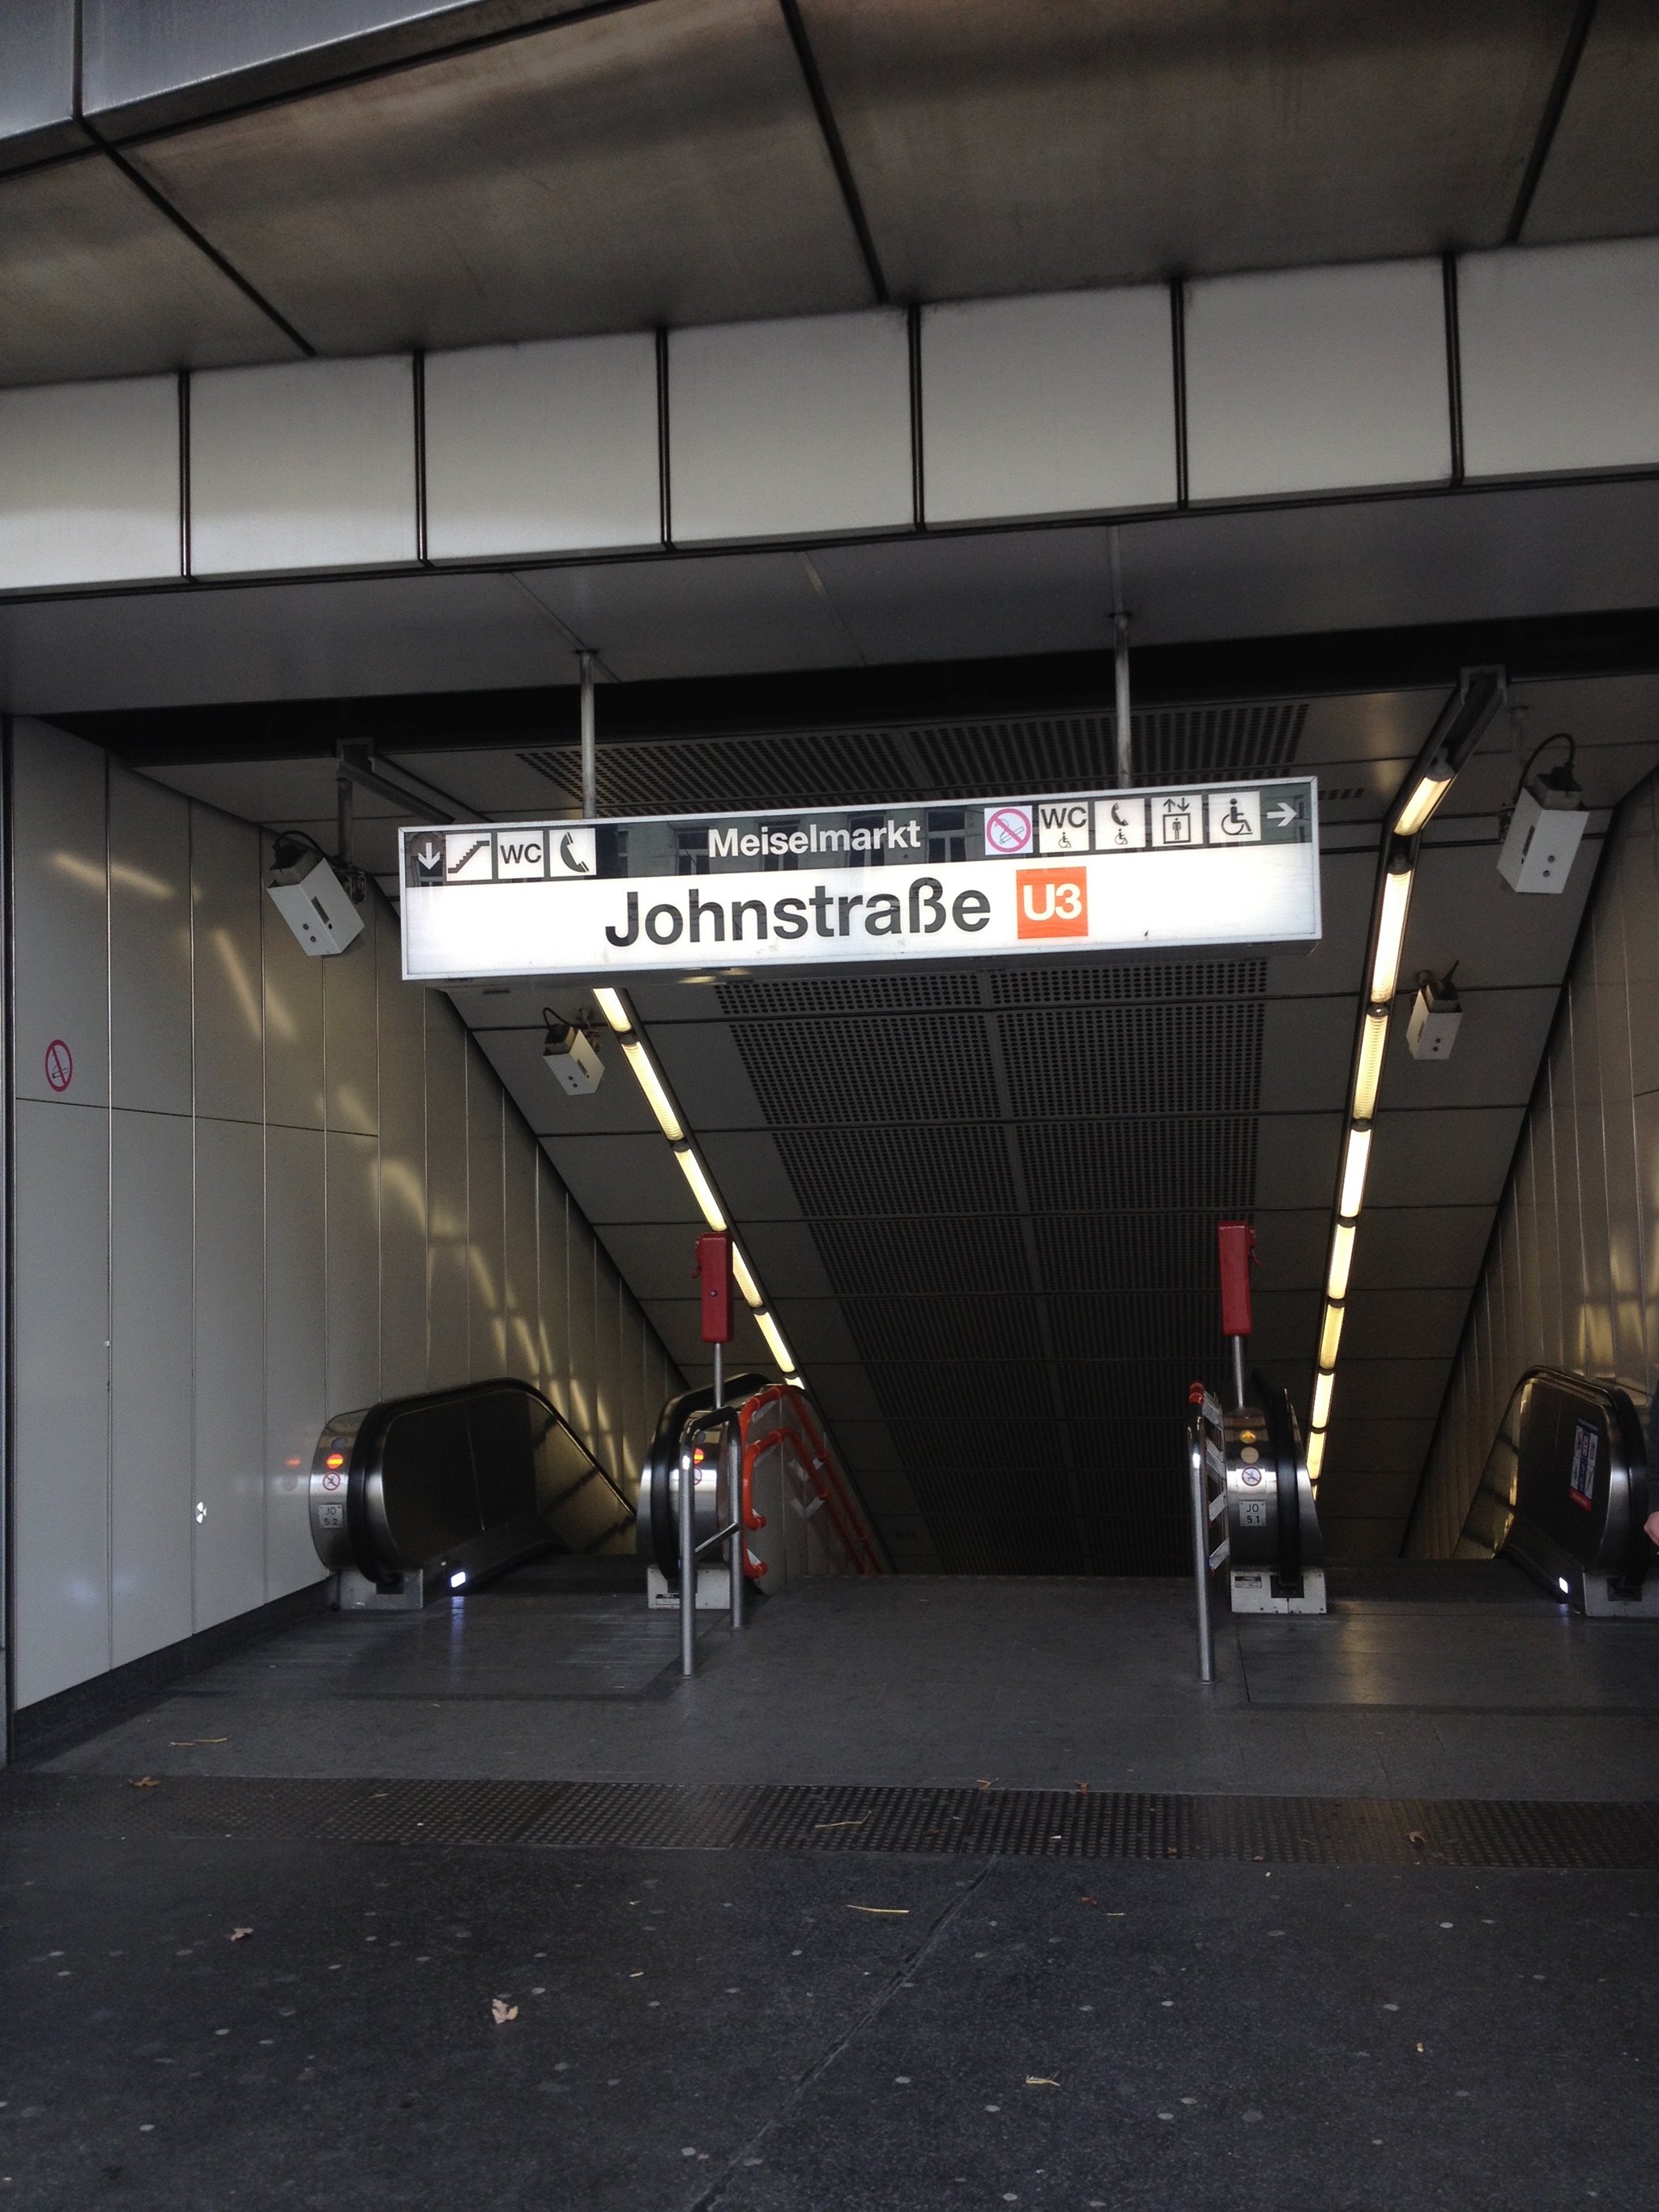 ubahn station 1150 johnstrasse